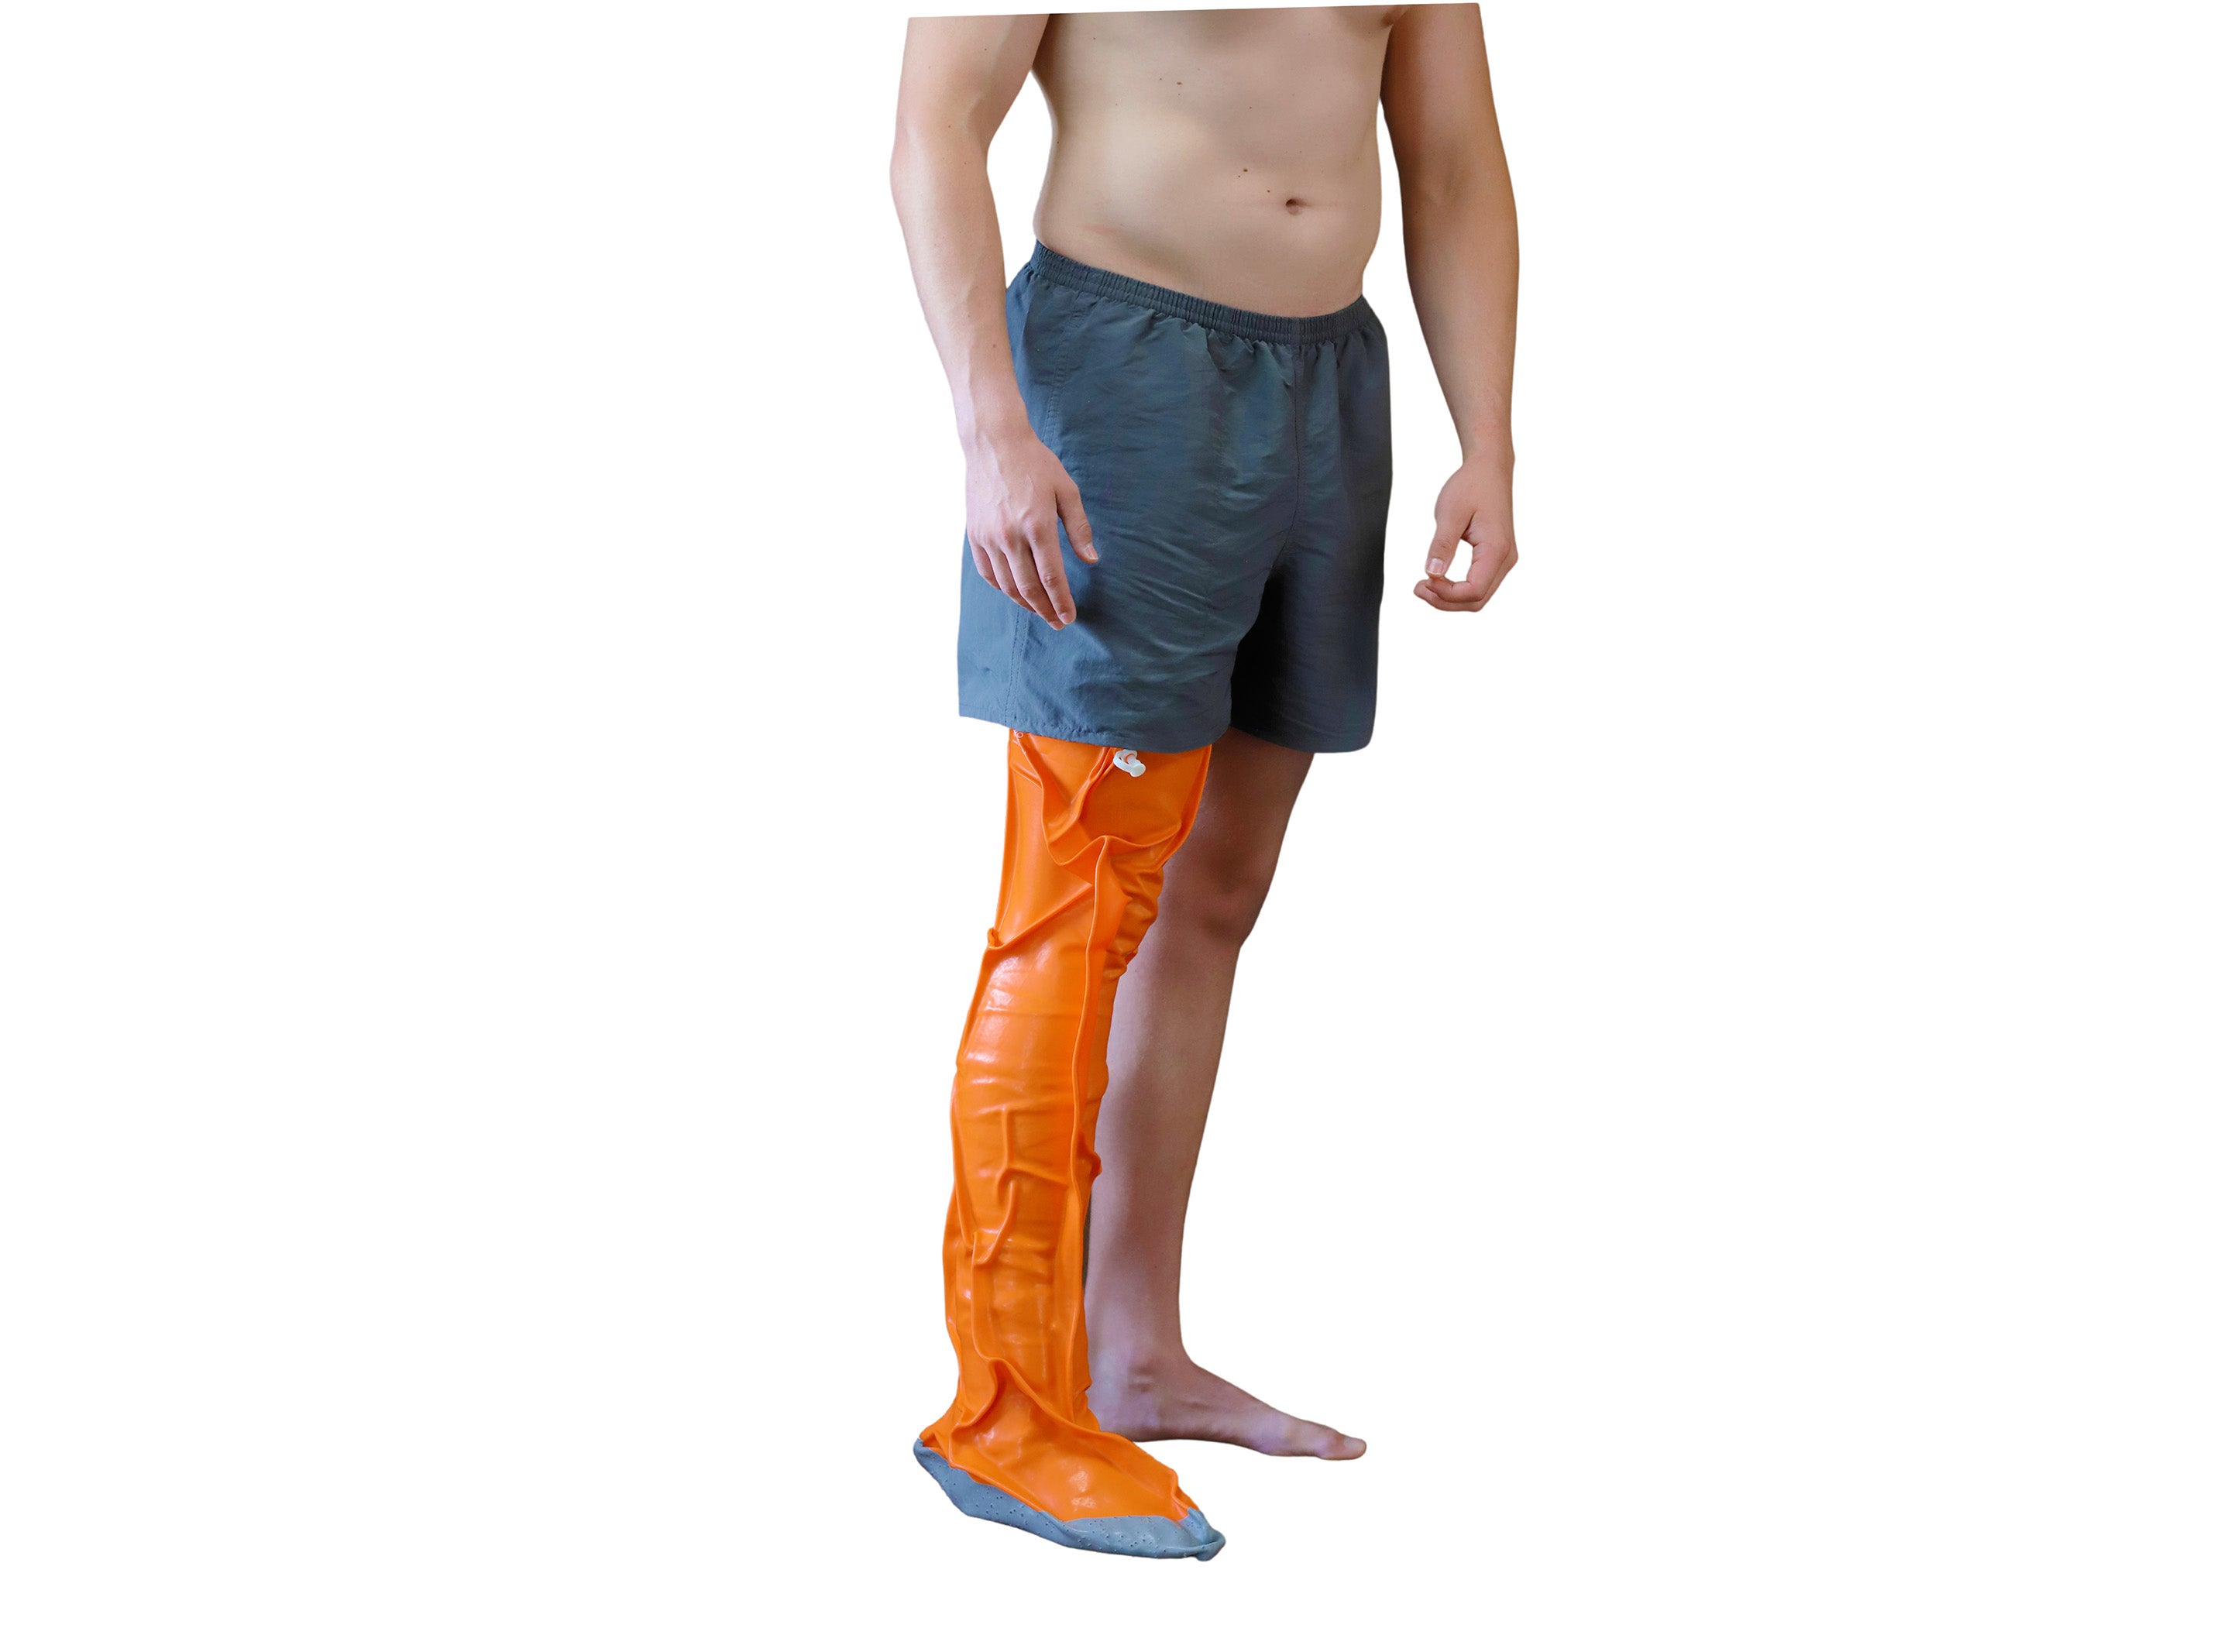 DryPro Waterproof CAST COVER LEG FULL HALF Protector Swim Shower